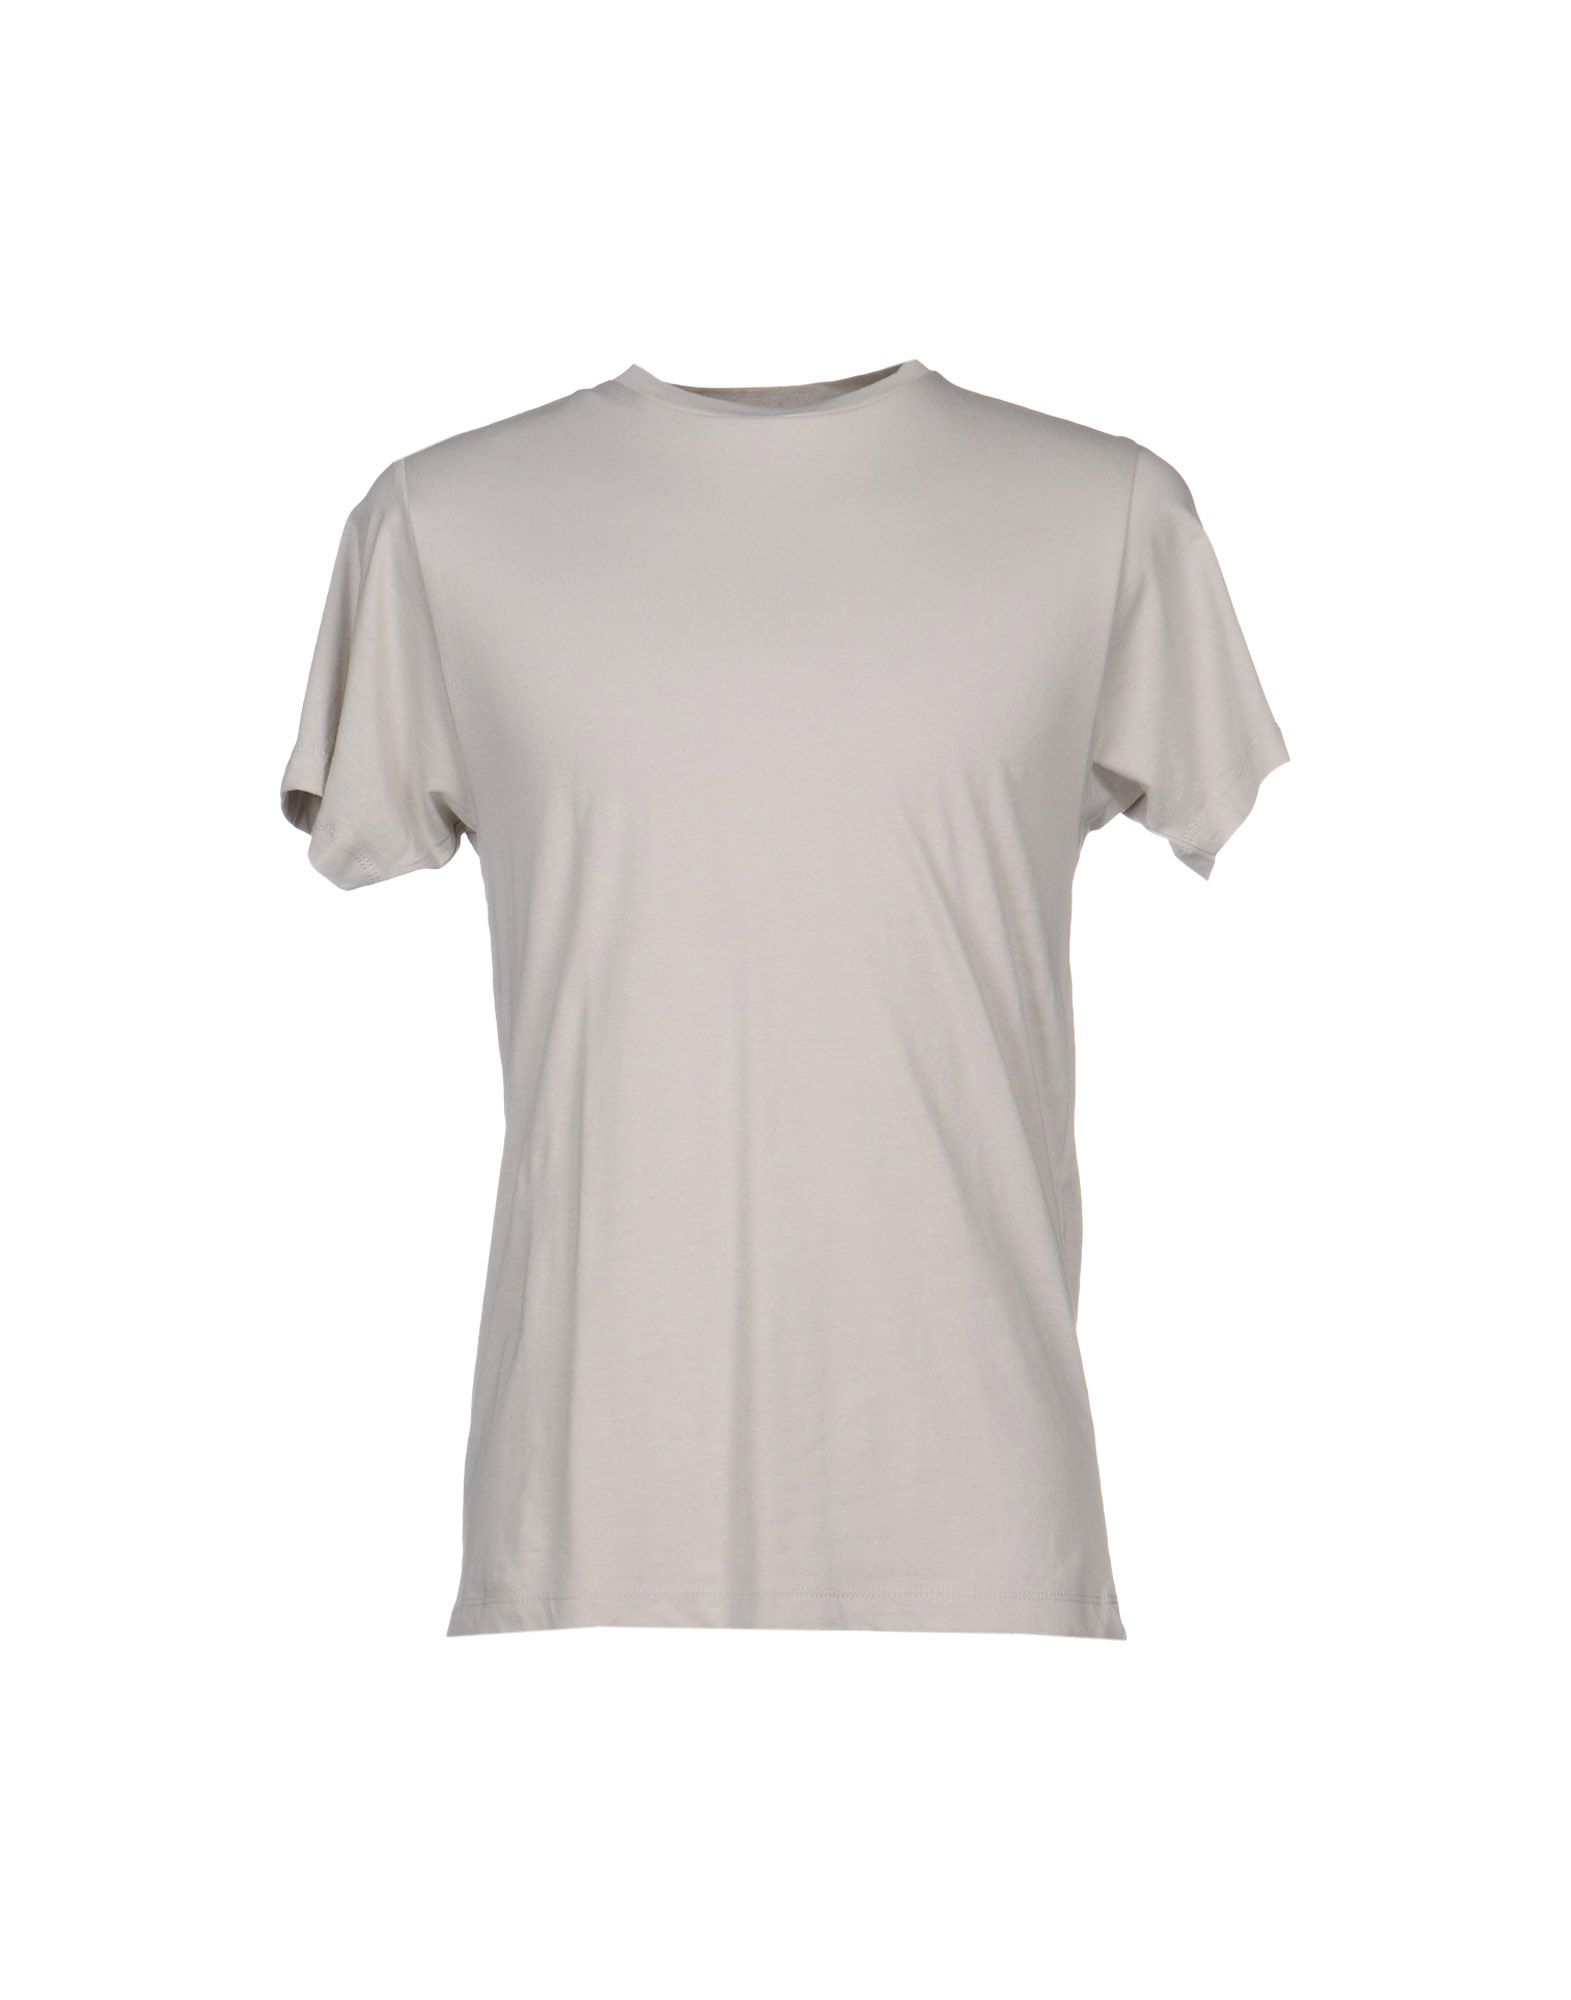 Lyst - Alternative apparel T-shirt in Gray for Men